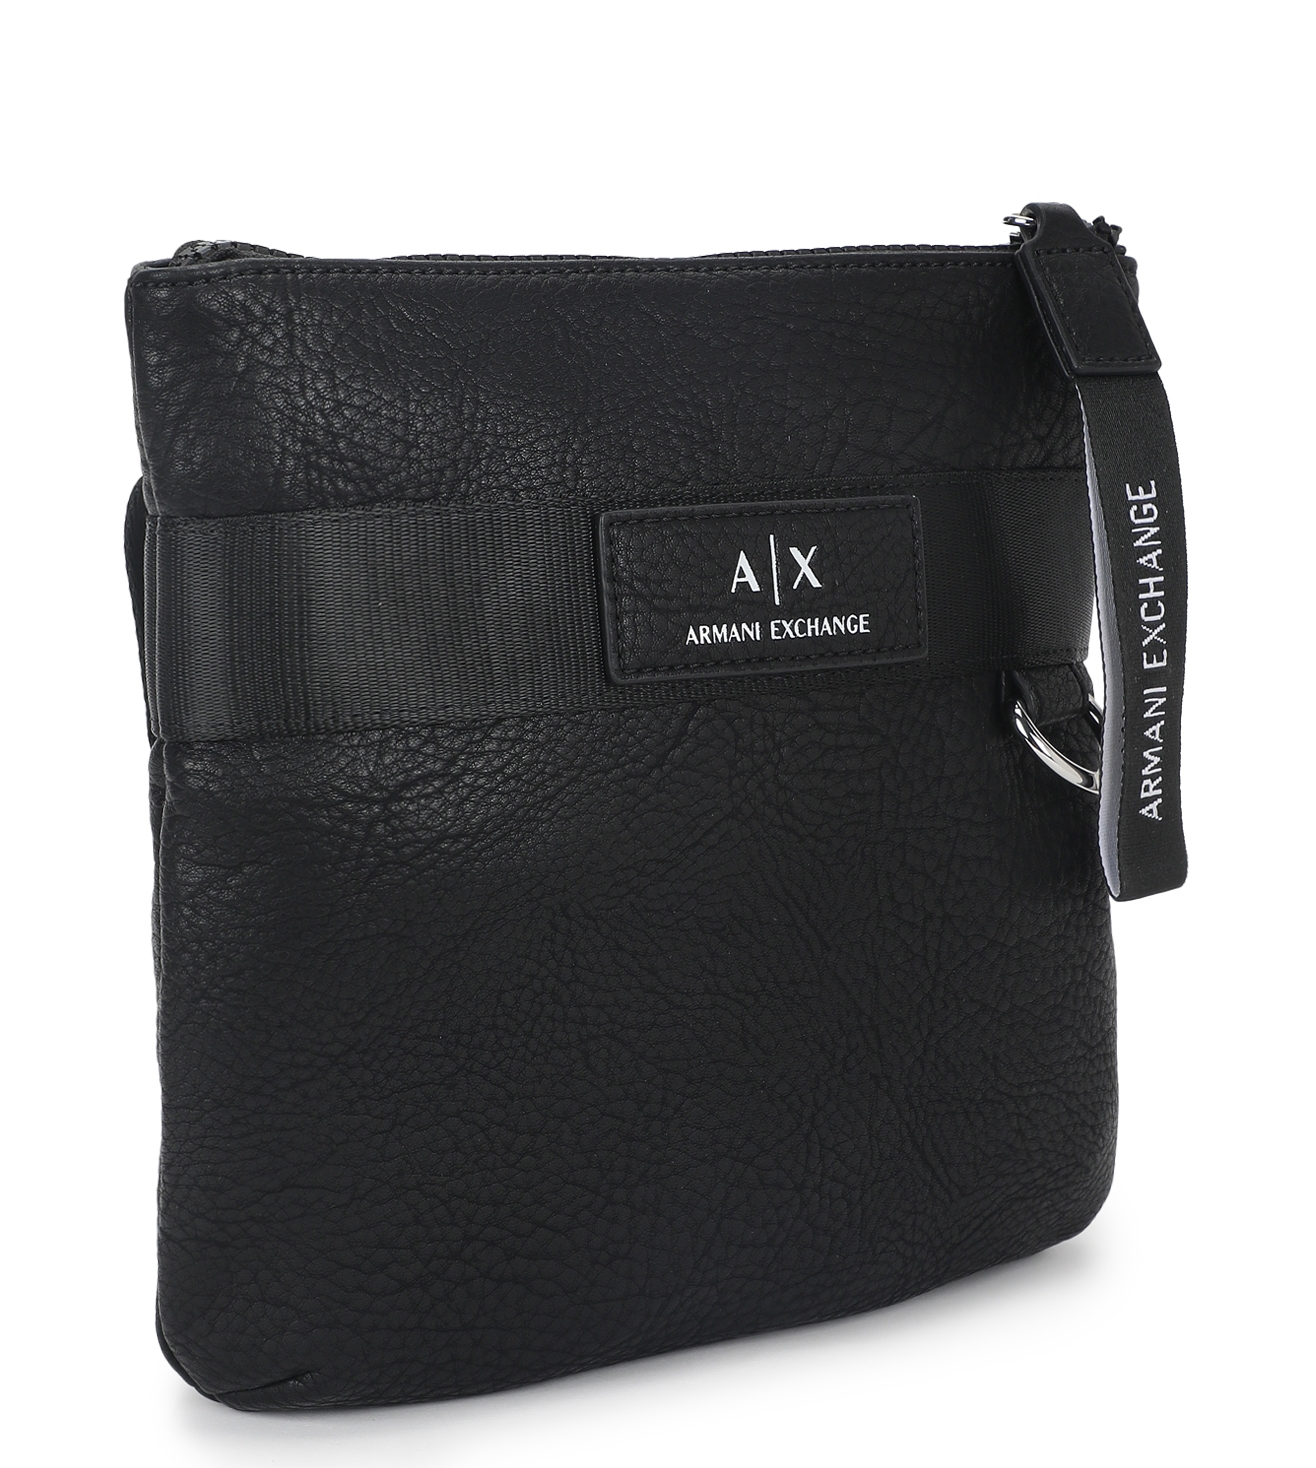 Giorgio Armani Leather Bags for Men for sale | eBay